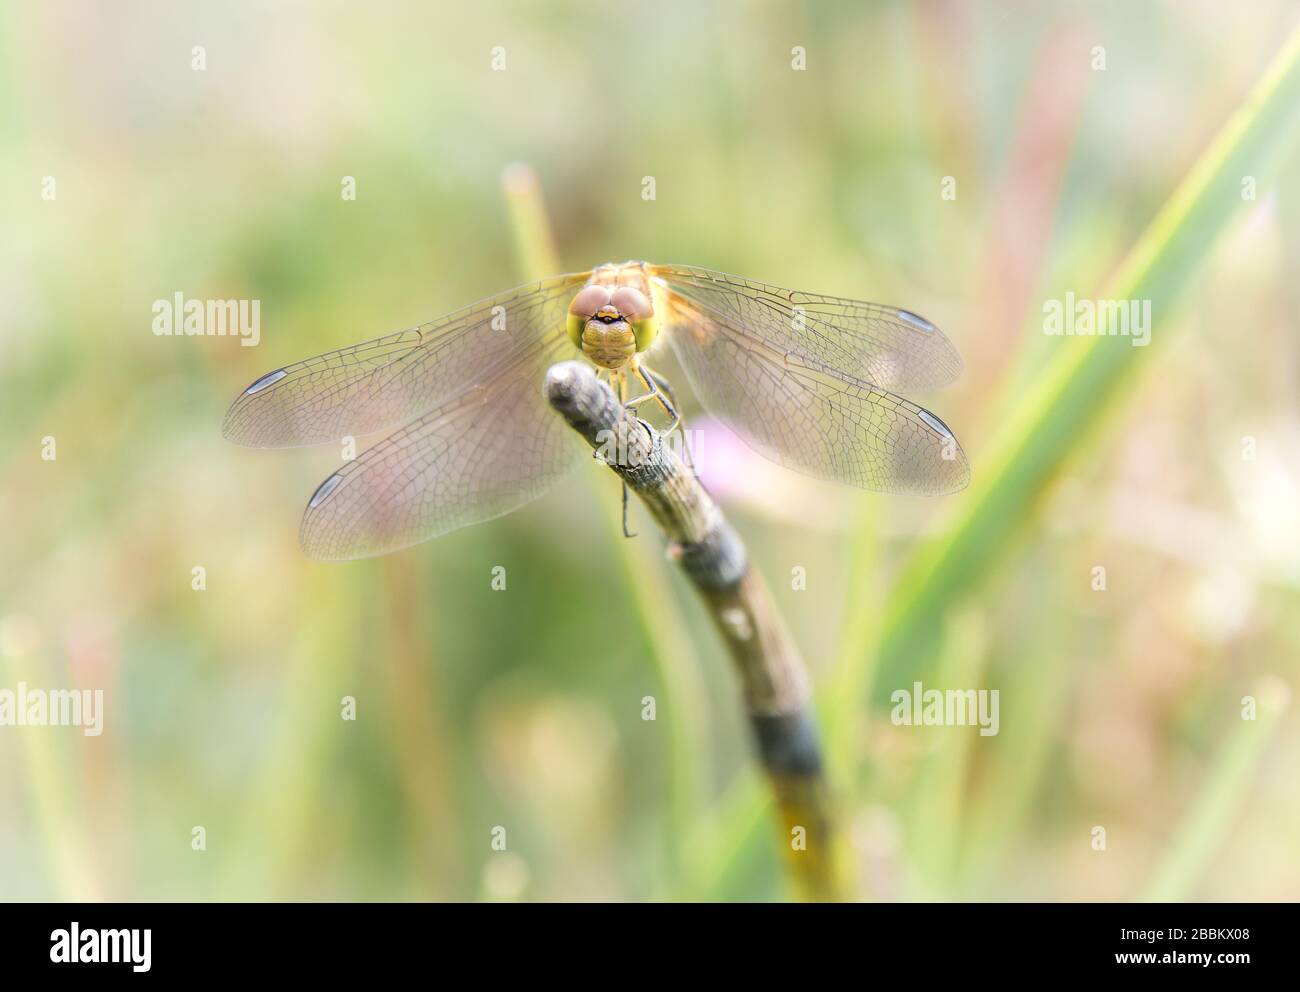 English country garden, Dragonfly in a UK country garden Stock Photo